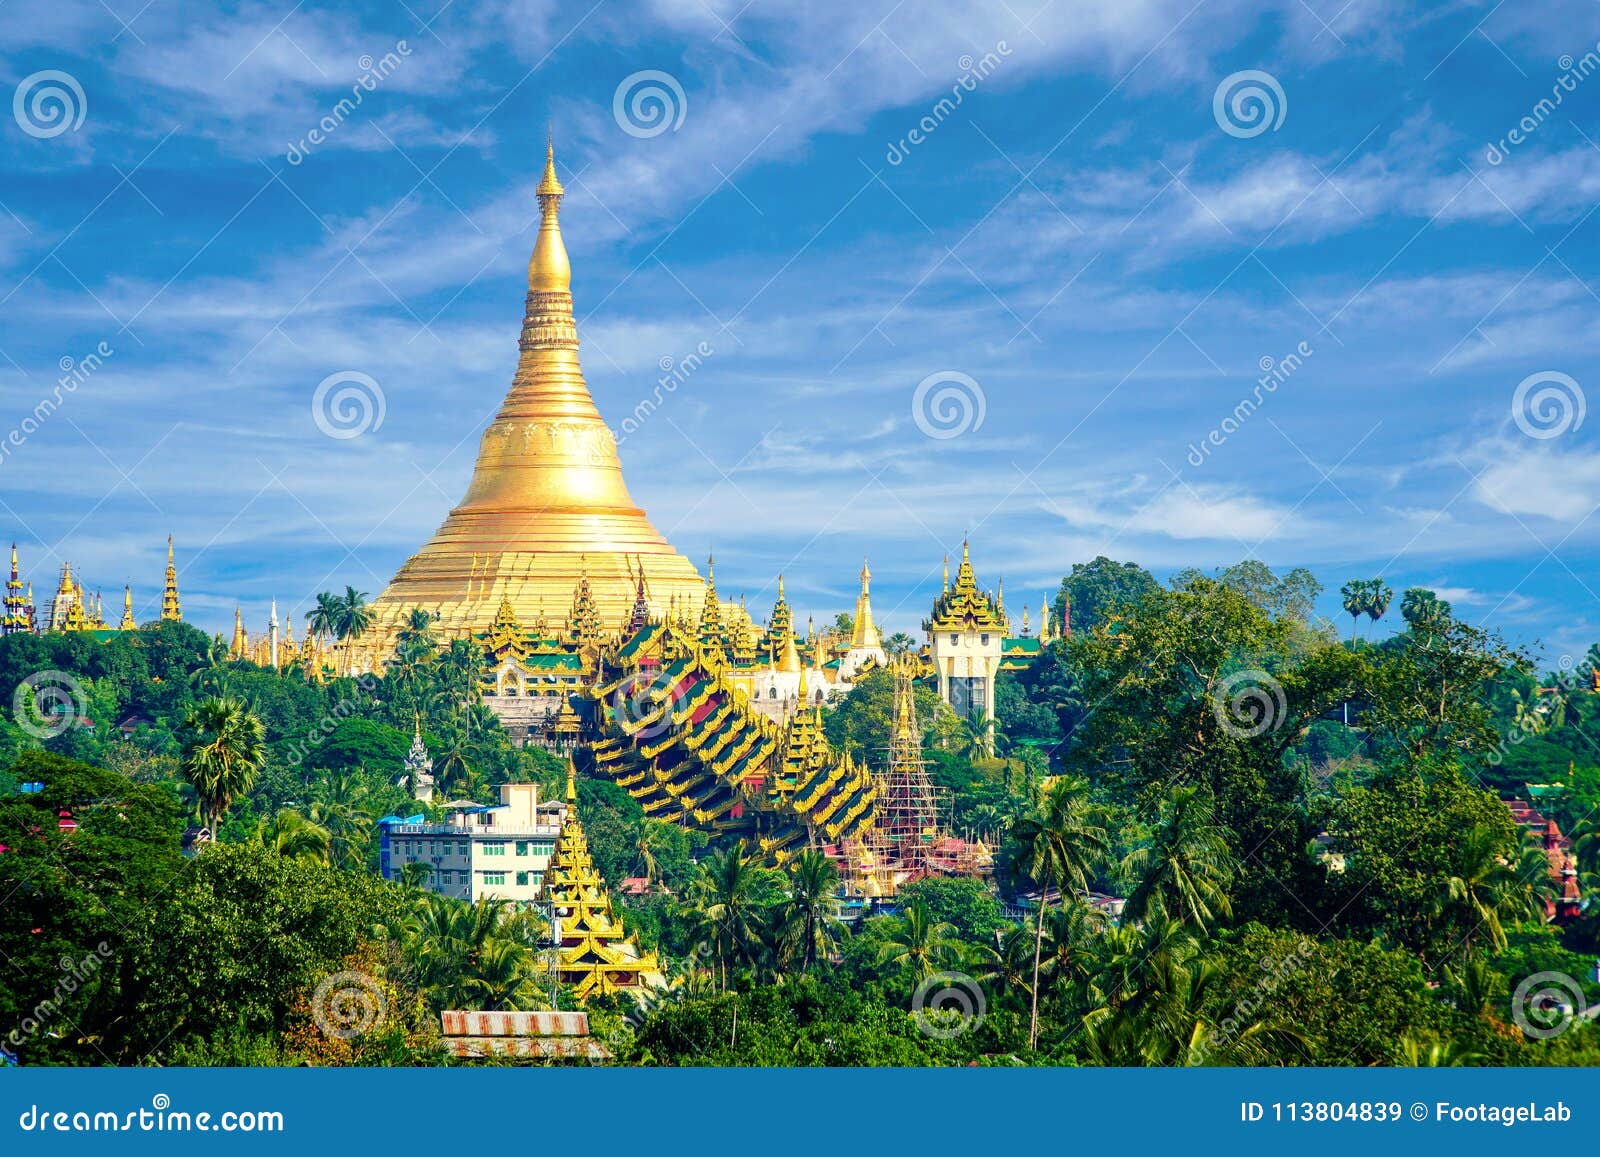 shwedagon pagoda in myanmar burma